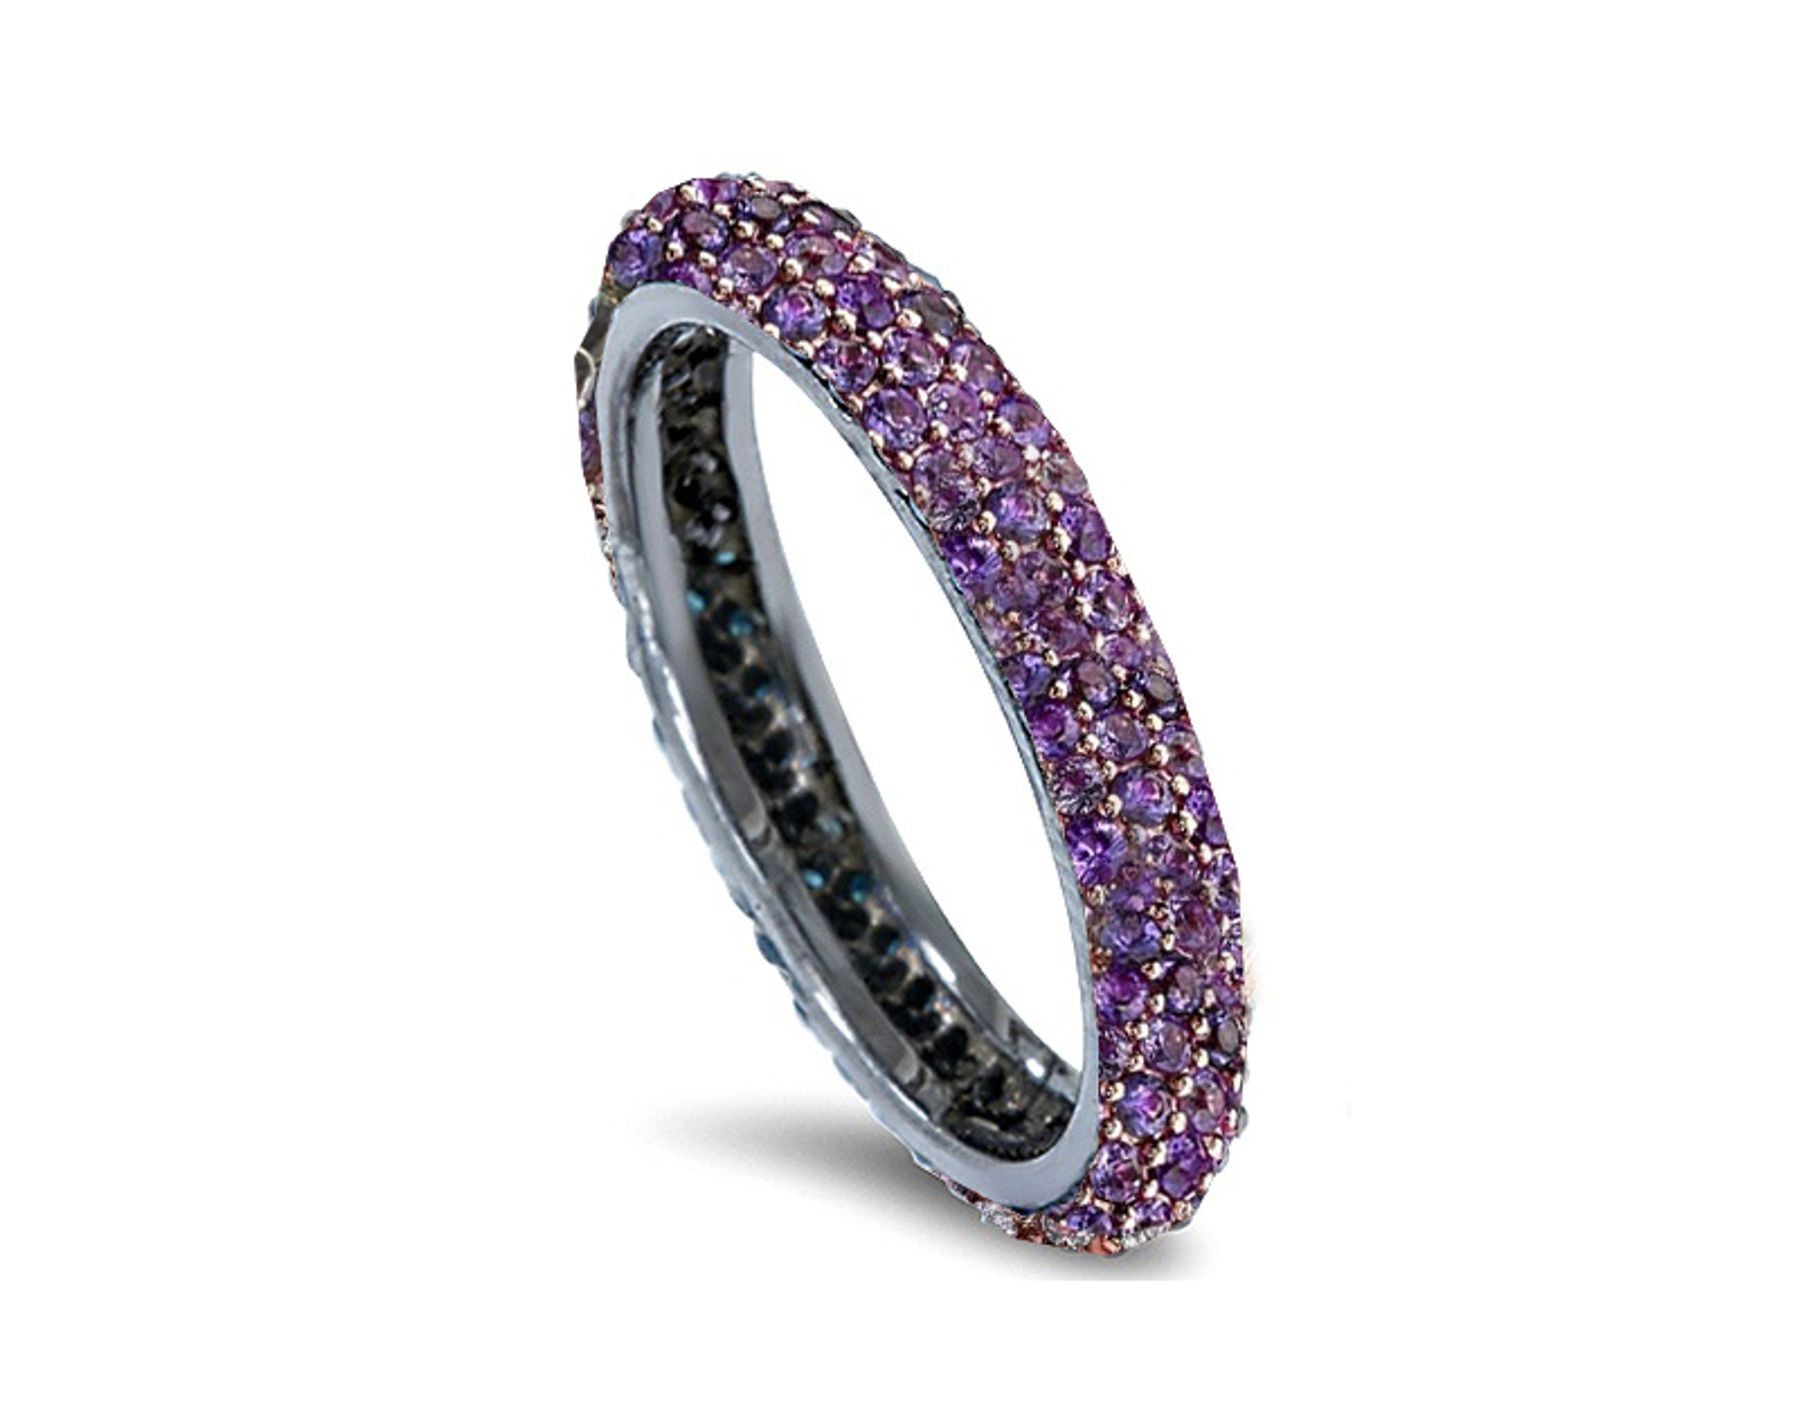 Delicate Women's Eternity Rings Featuring Vivid Purple Sapphires & Diamonds in Halo Precision Micro pave Settings